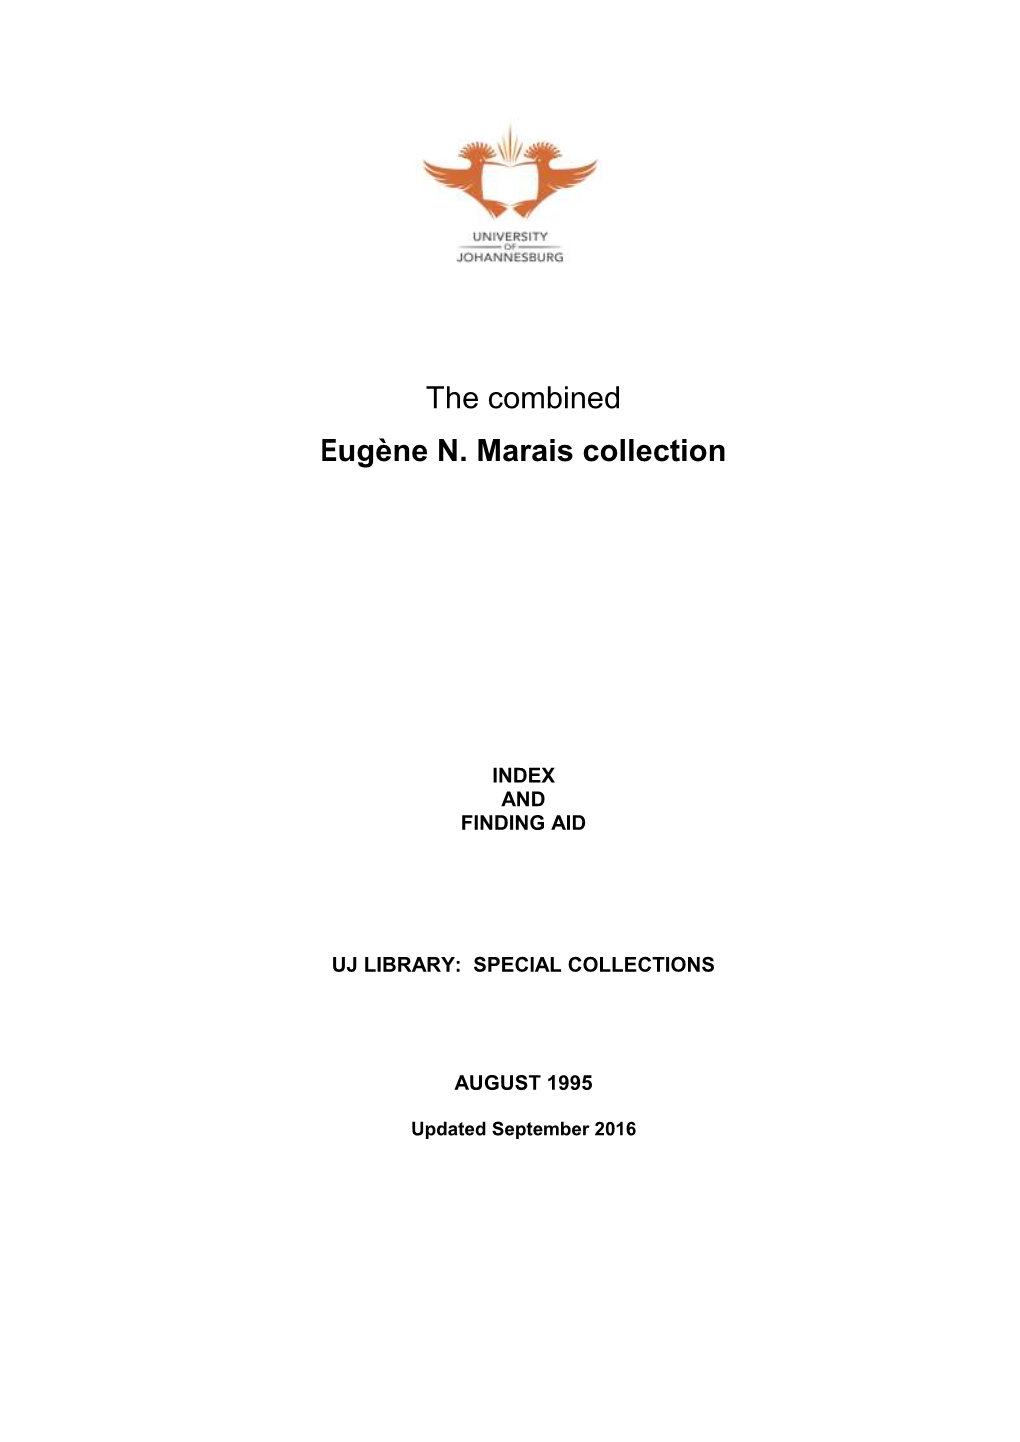 The Combined Eugène N. Marais Collection